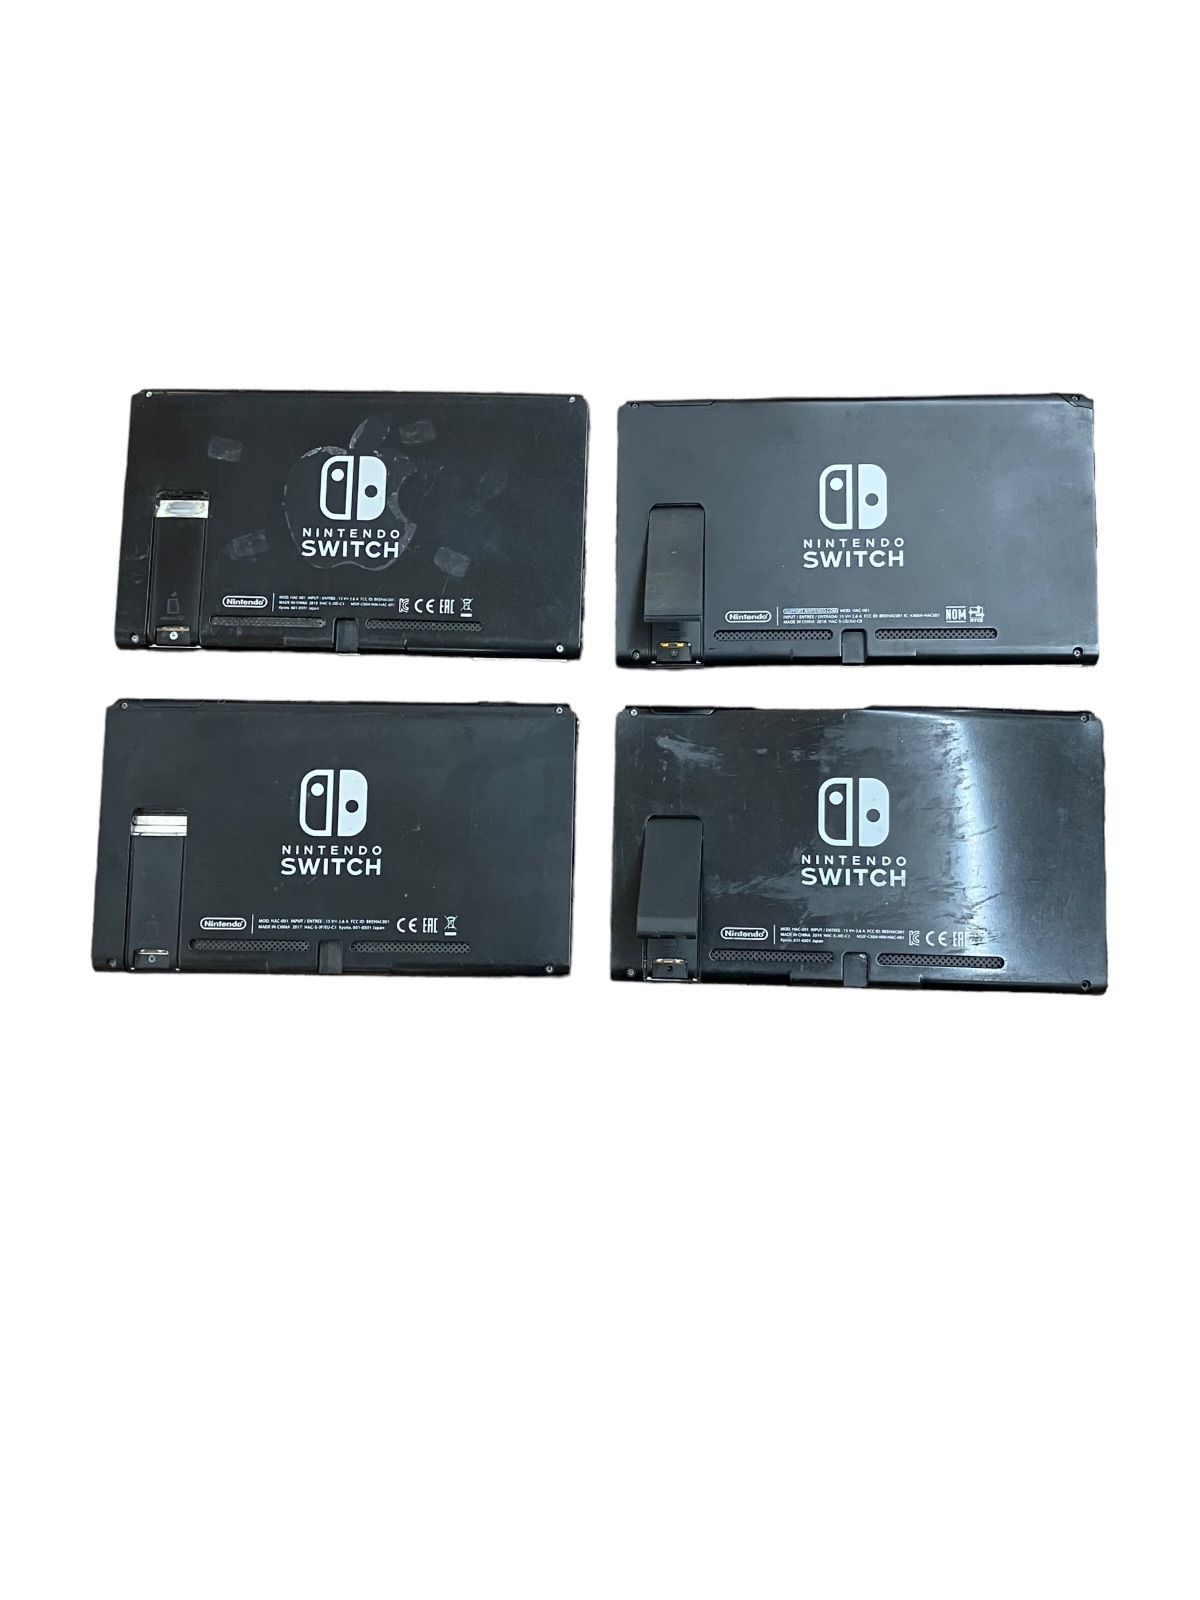 Nintendo Switch 旧型 本体のみ 不動品 10台まとめ売り - メルカリ